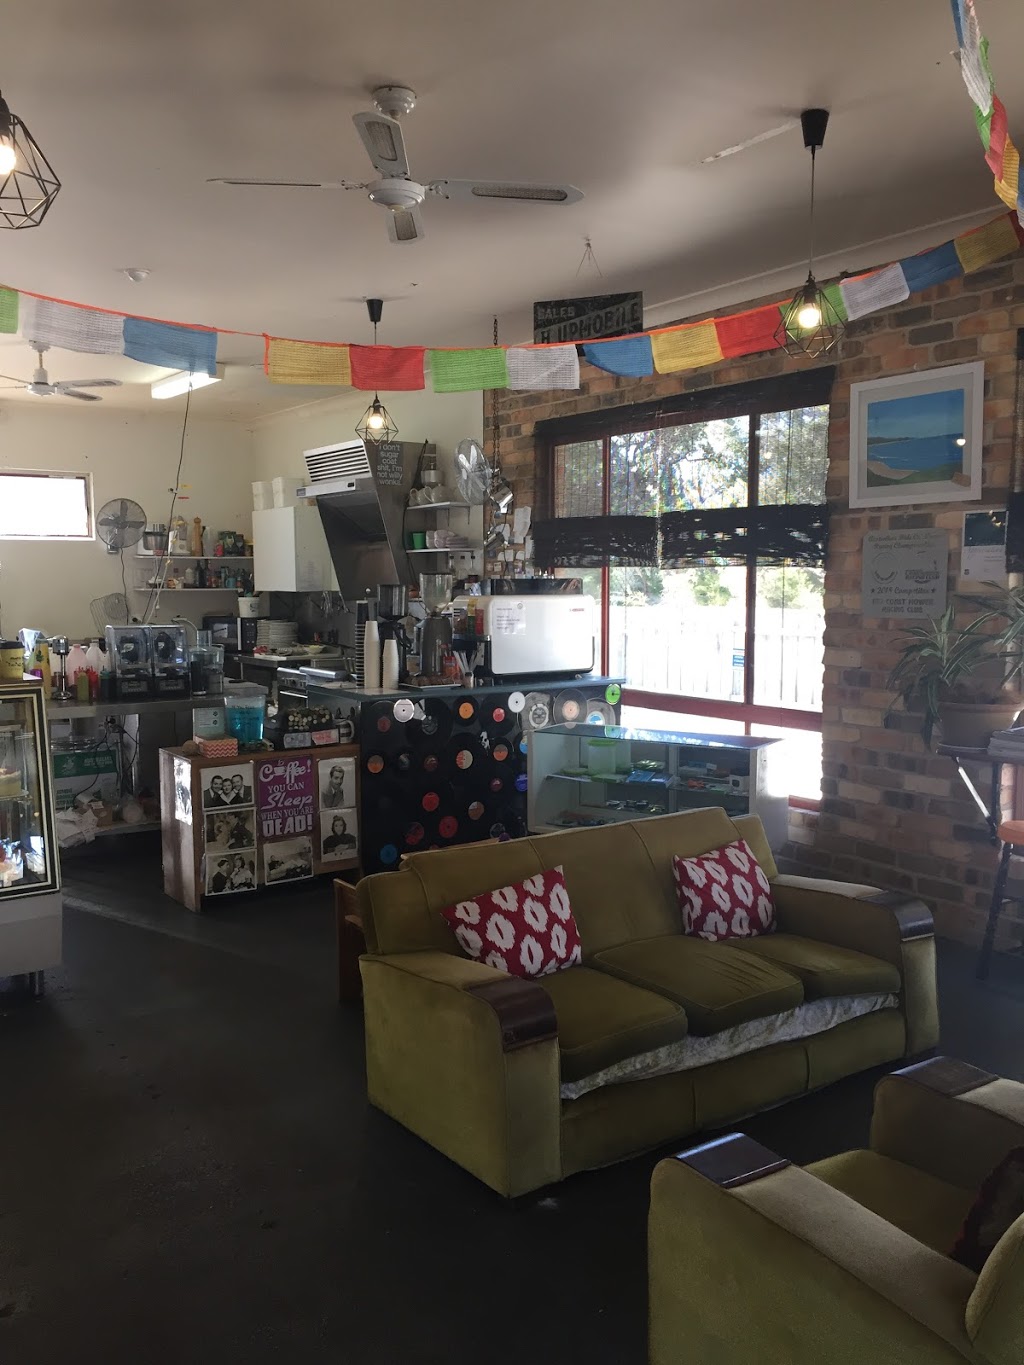 Matts cafe | shop 3/70-74 Ocean Ave, Stuarts Point NSW 2441, Australia | Phone: (02) 6569 0361